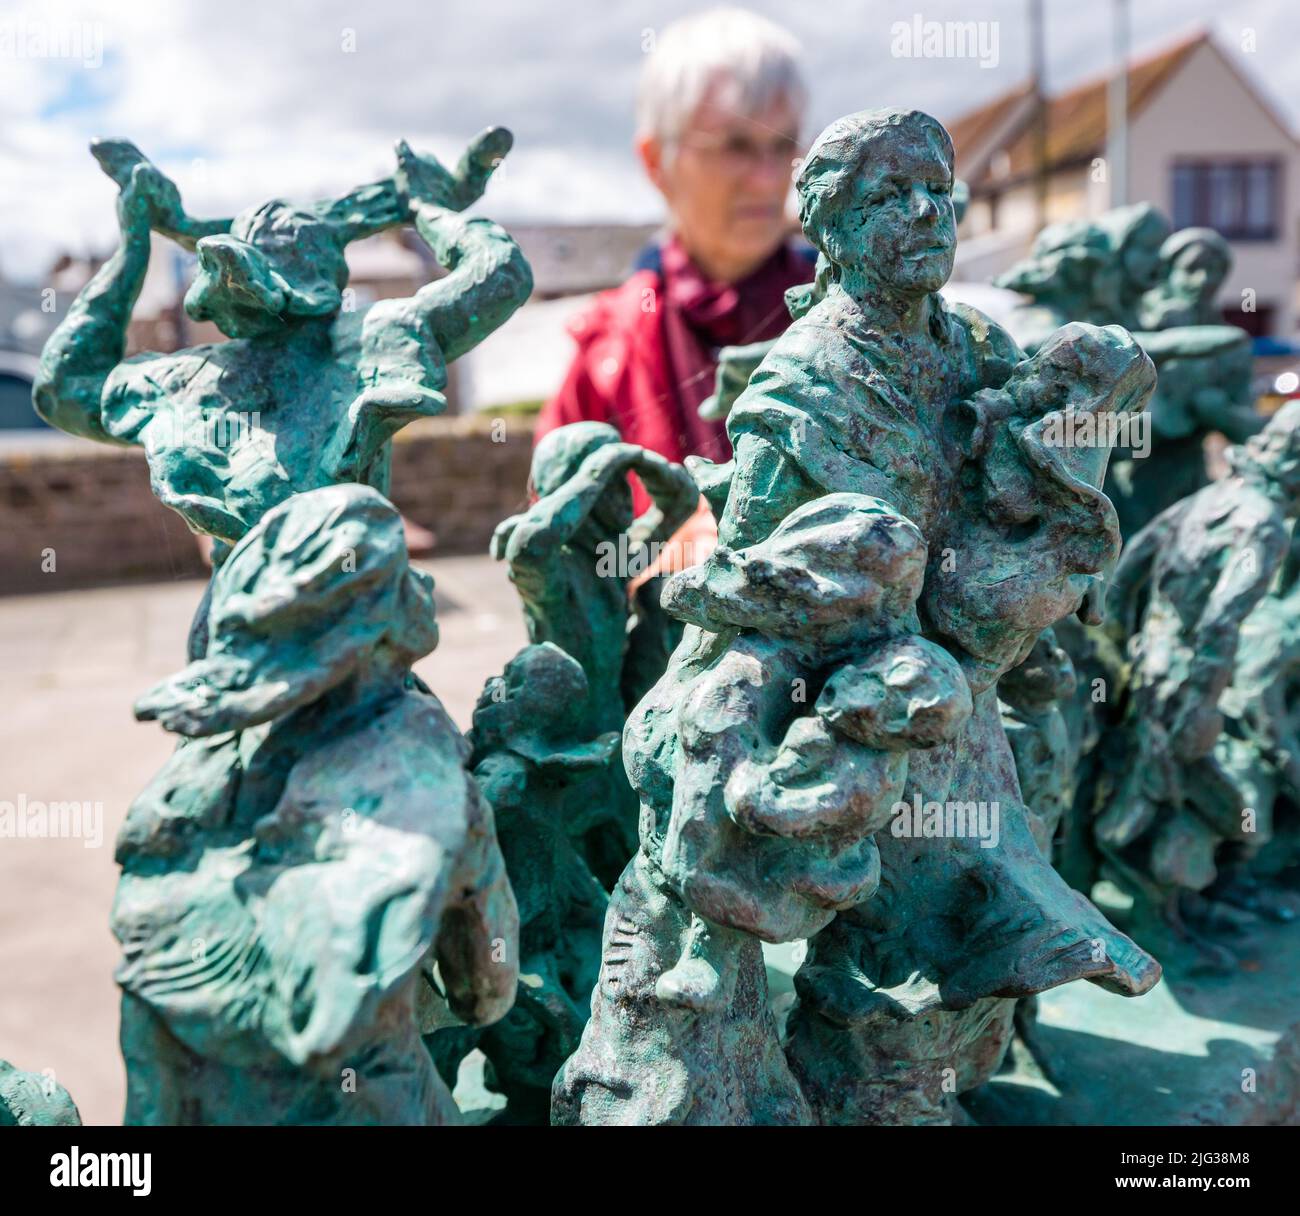 Estatua memorial del desastre pesquero de figuras en miniatura de viudas y niños por Jill Watson, Eyemouth, Berwickshire, Escocia, Reino Unido Foto de stock